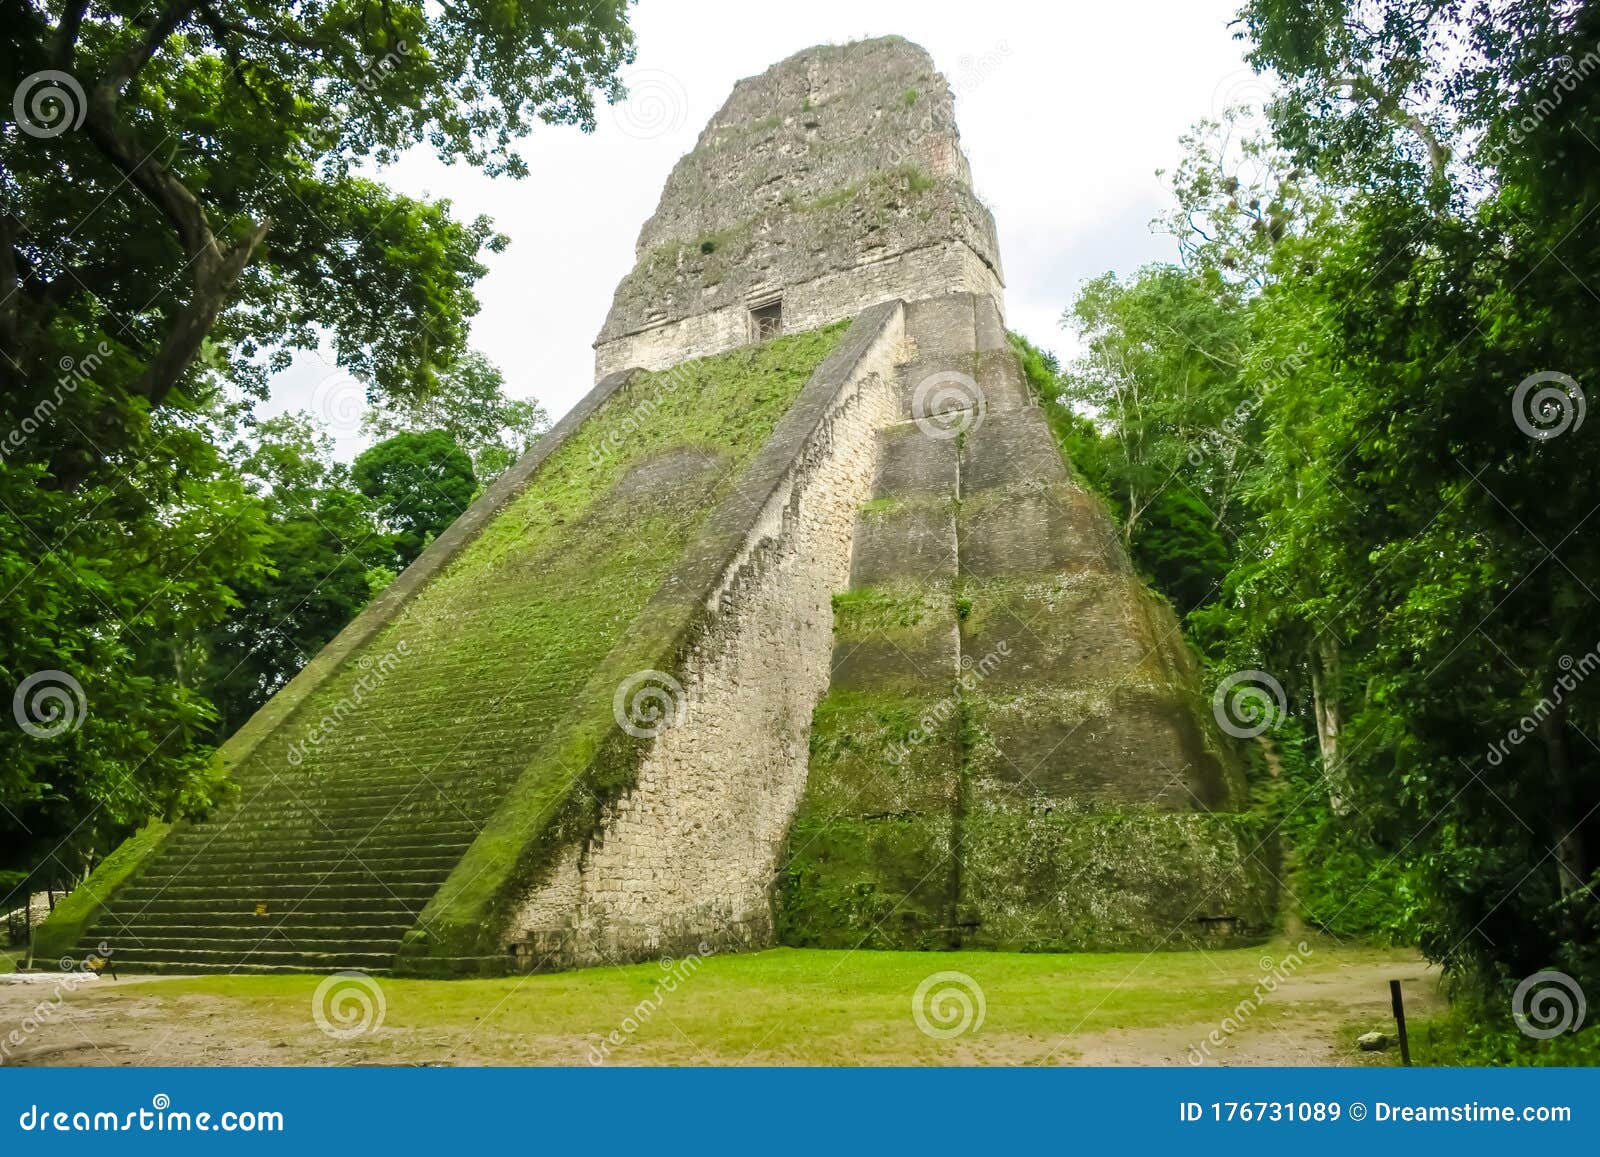 The Ancient Pyramid Of The Mayan Civilization In Tikal, Guatemala ...